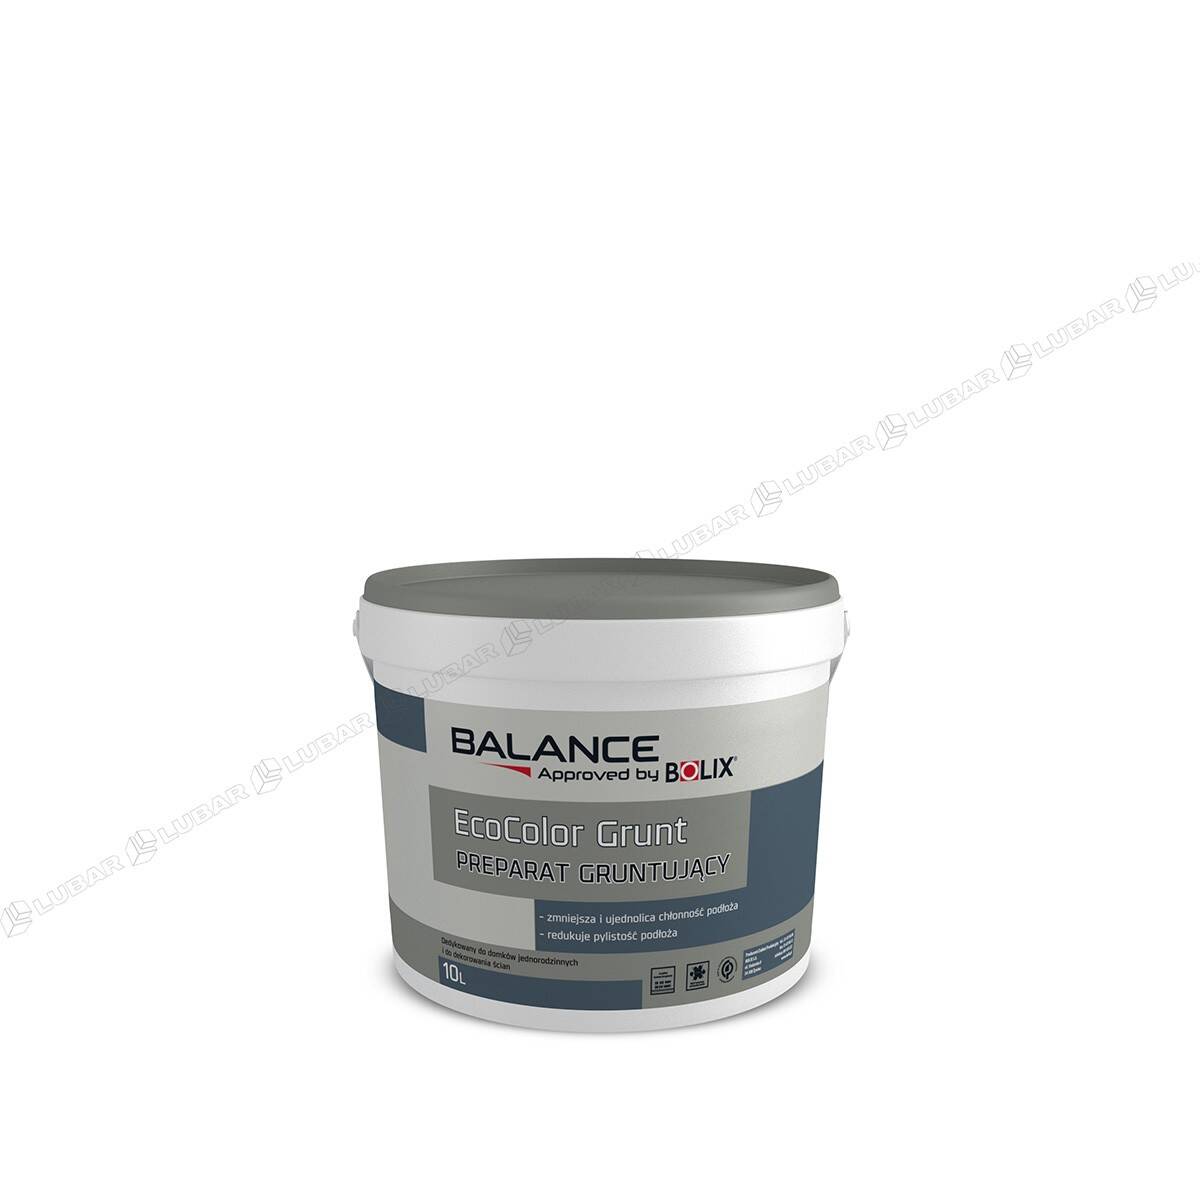 BOLIX Balance EcoColor Grunt Preparat gruntujący pod farby silikonowe 10l